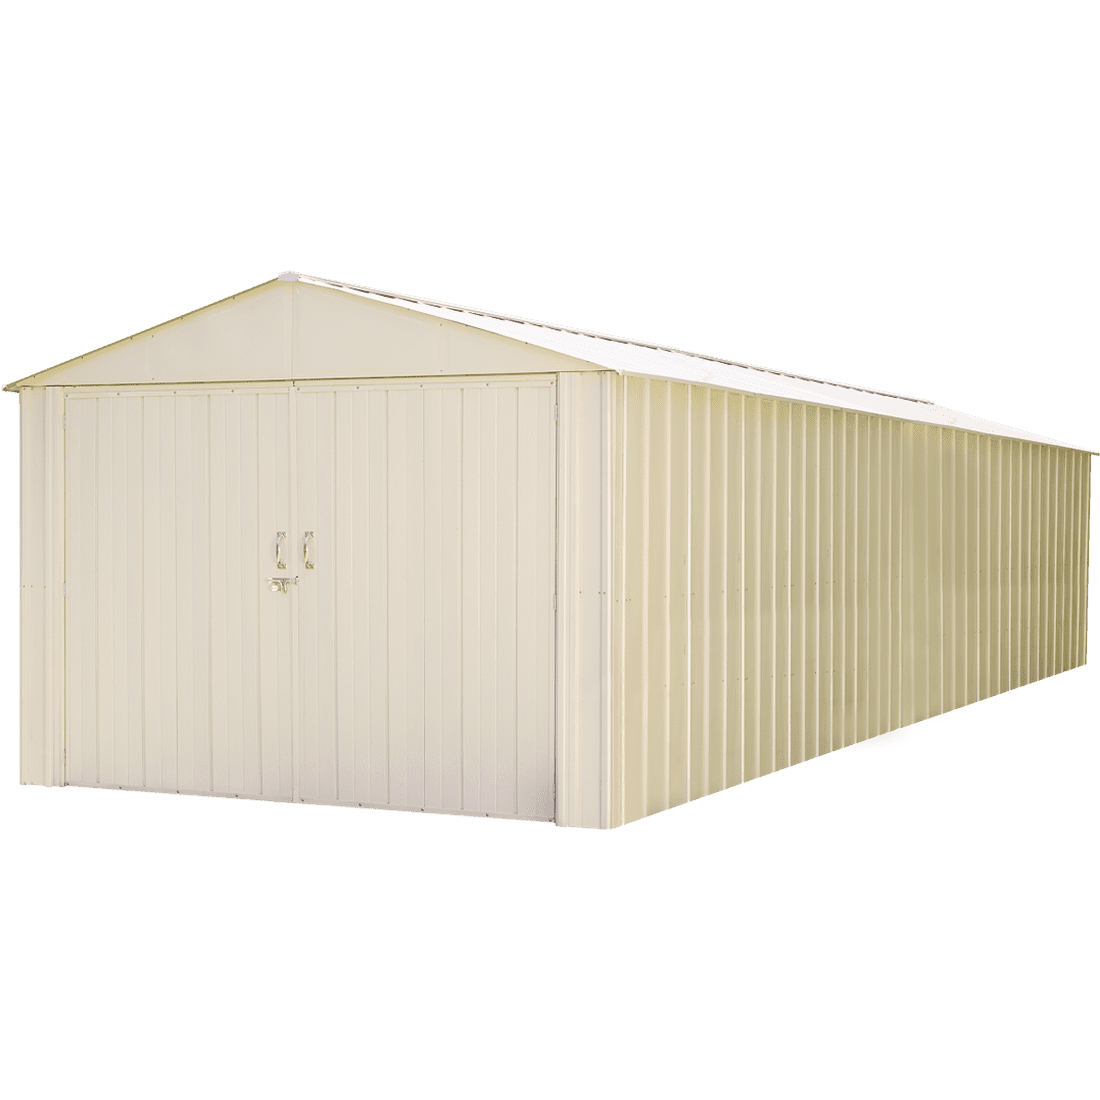 Shelter Logic Arrow Commander Series Storage Building, 10 ft. x 30 ft. x 8 ft. CHD1030